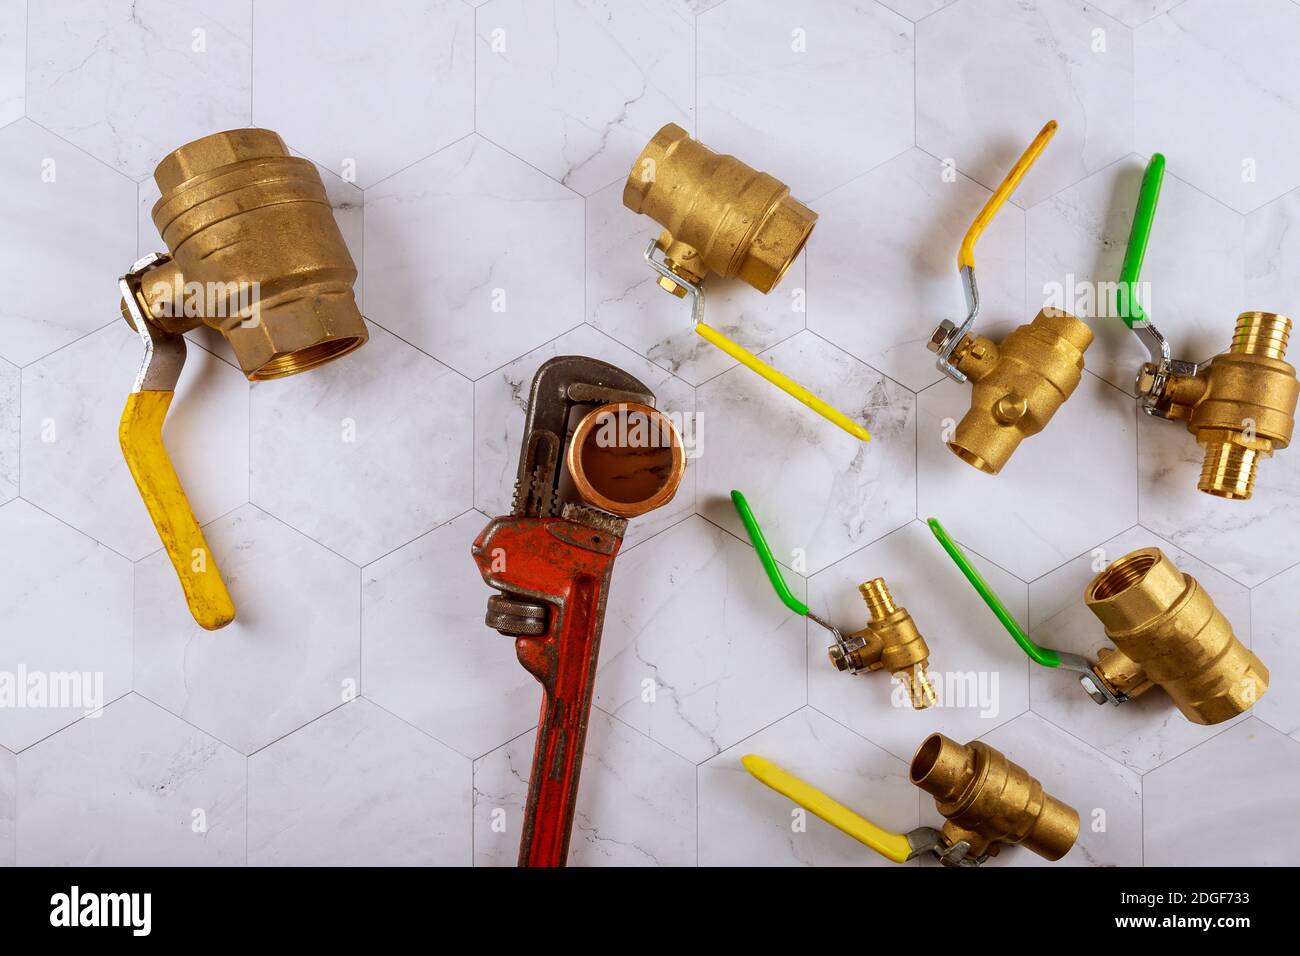 Installation plumbing parts monkey wrench construction brass plumbing fittings gate valve Stock Photo